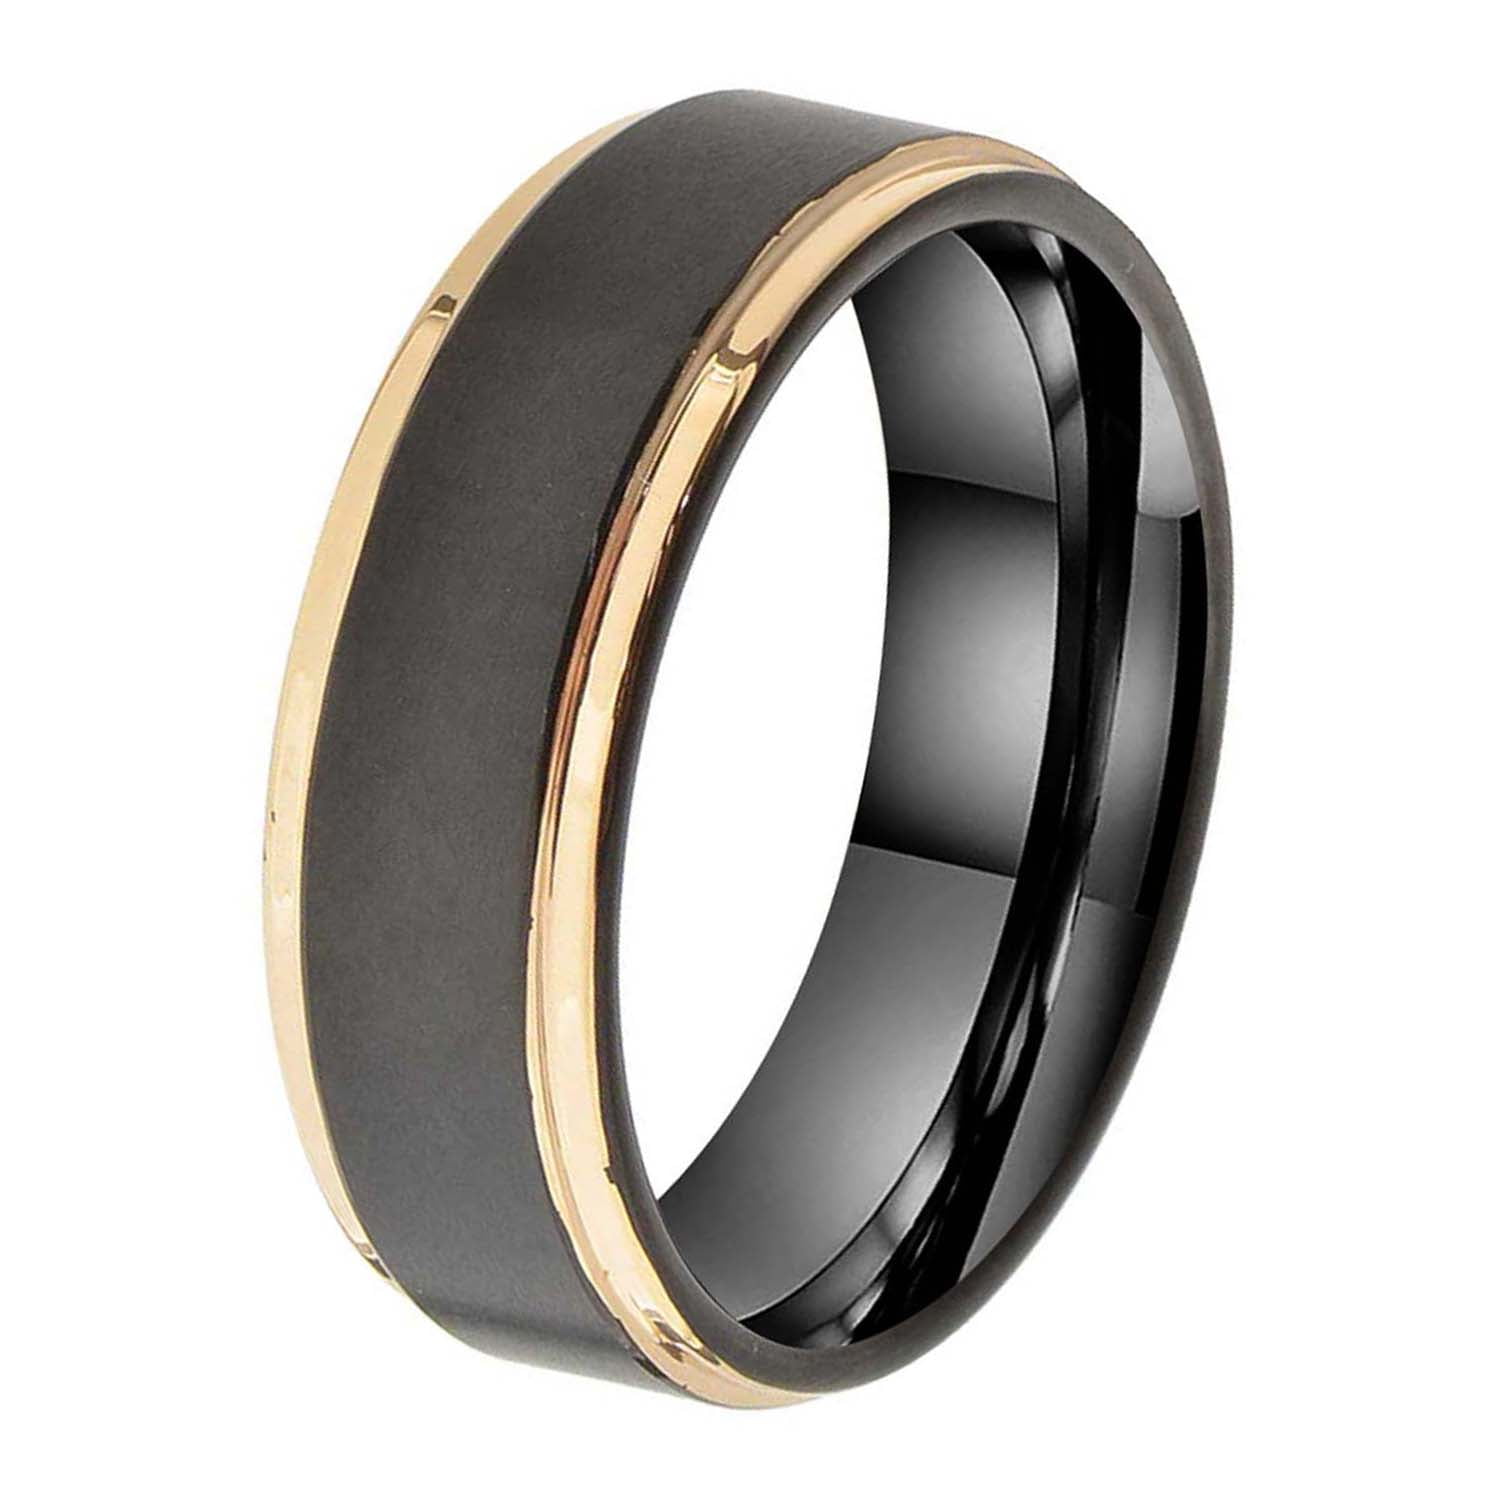 Tungsten Carbide ring rose gold black brushed Wedding Band Ring men's jewelry 